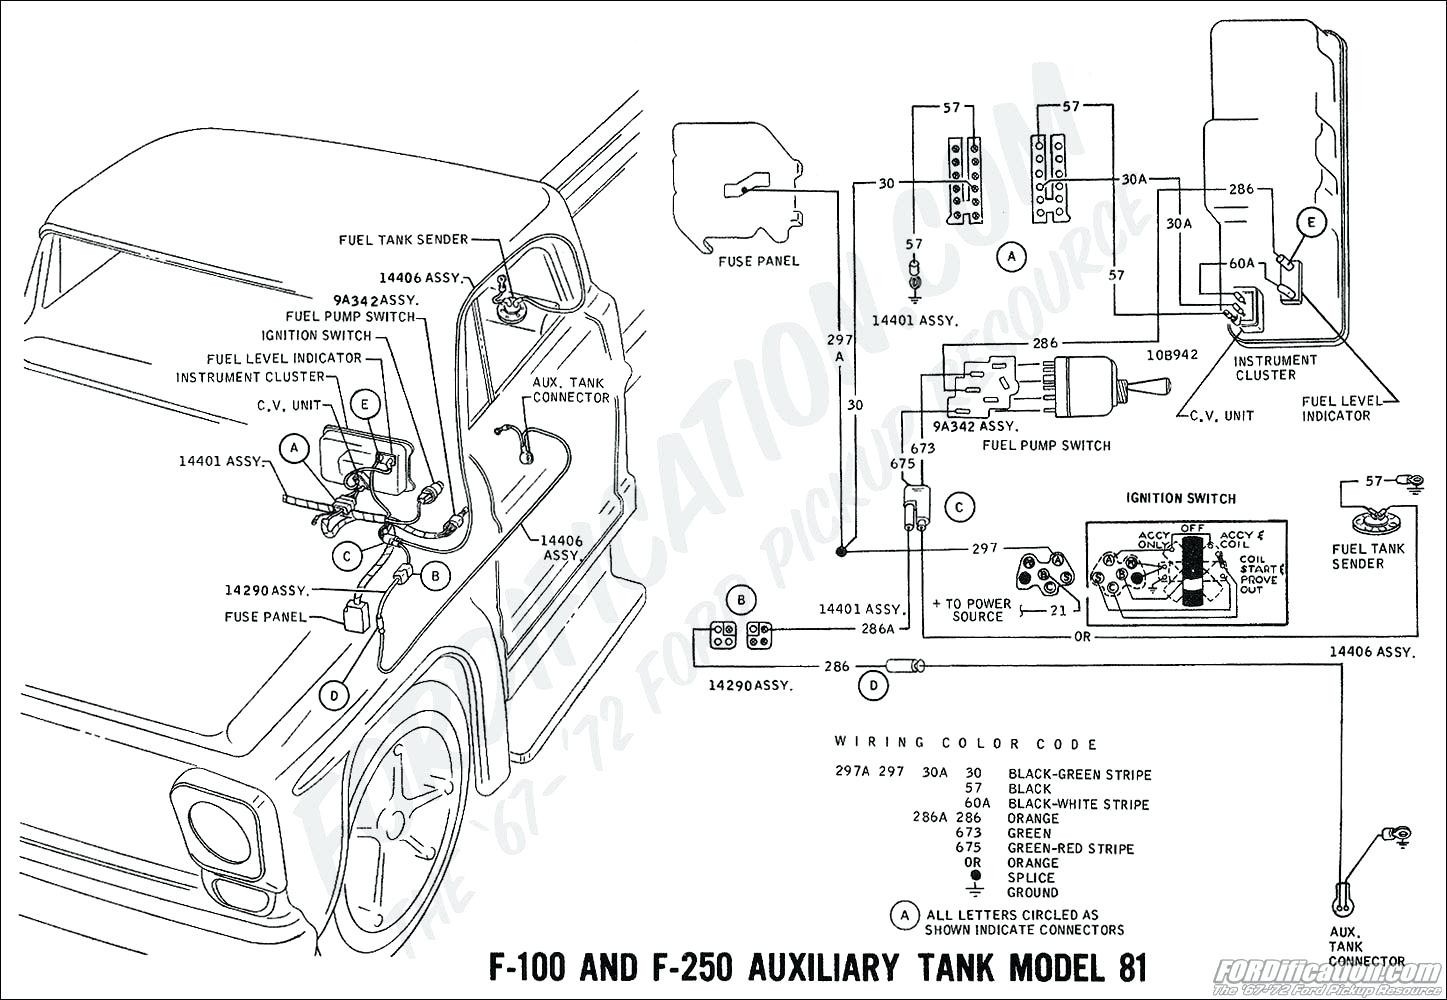 Fuel Gauge Sending Unit Wiring Diagram Ford Truck Diagrams Showy